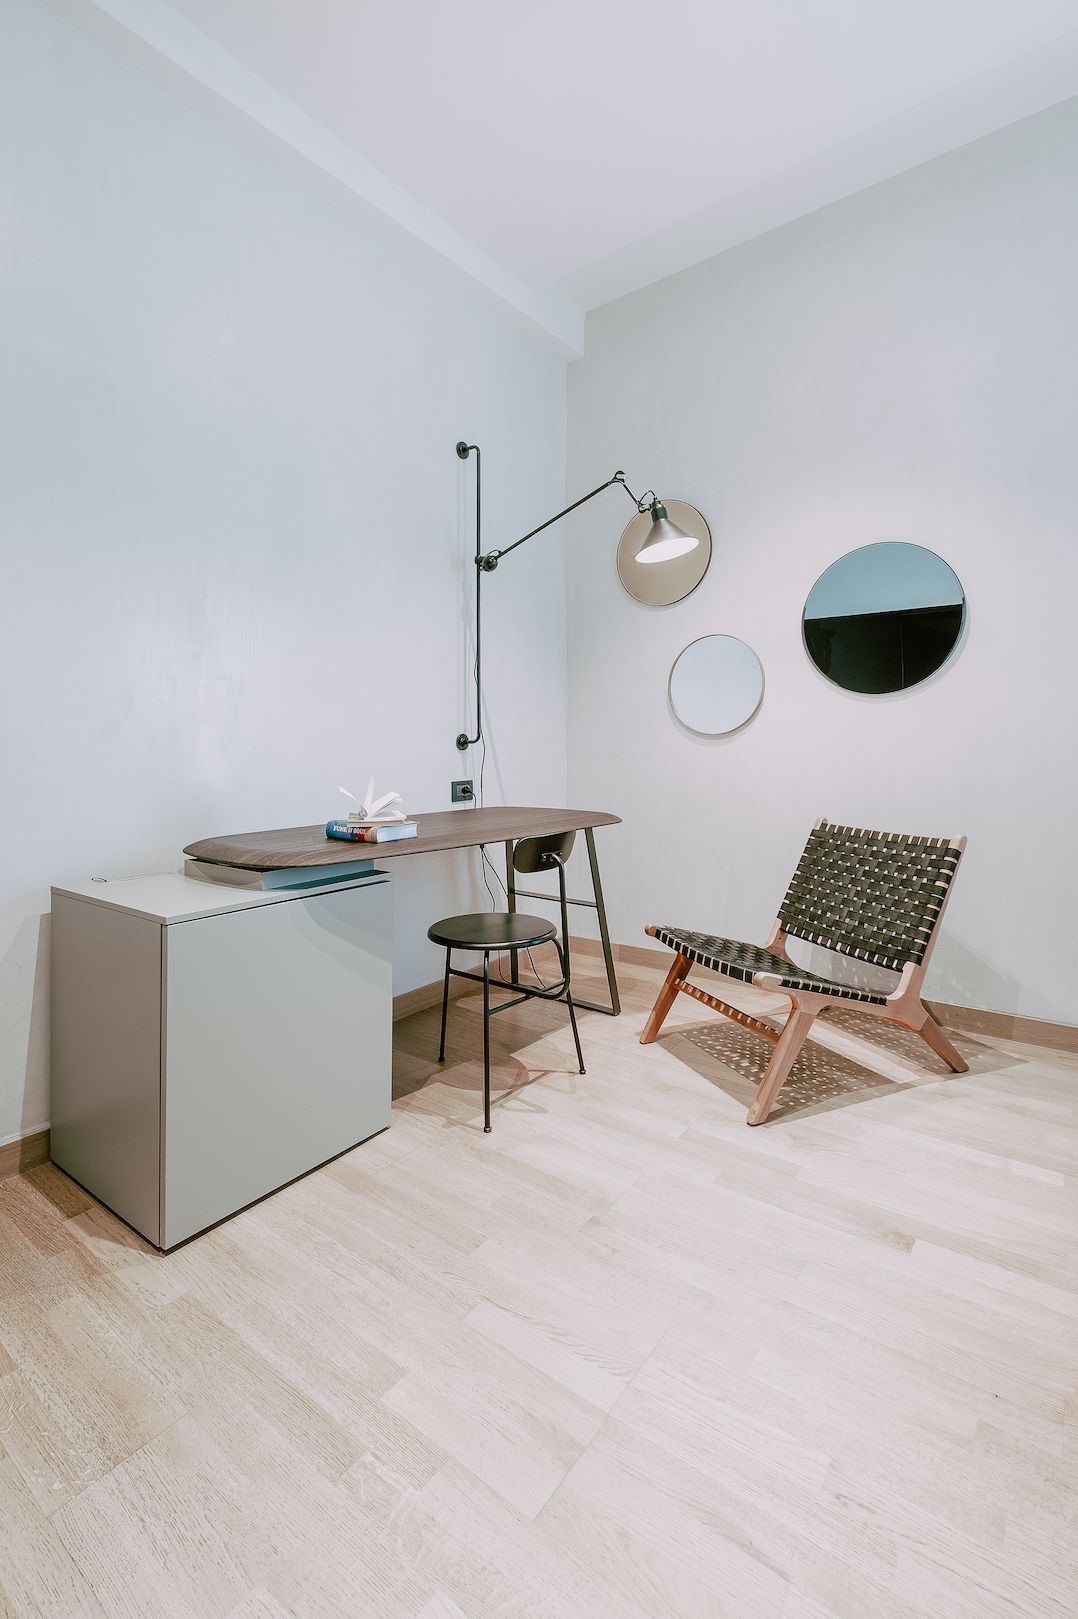 Design Bedrooms modern and minimalist | Aqva Boutique Hotel in Sirmione, Lake Garda